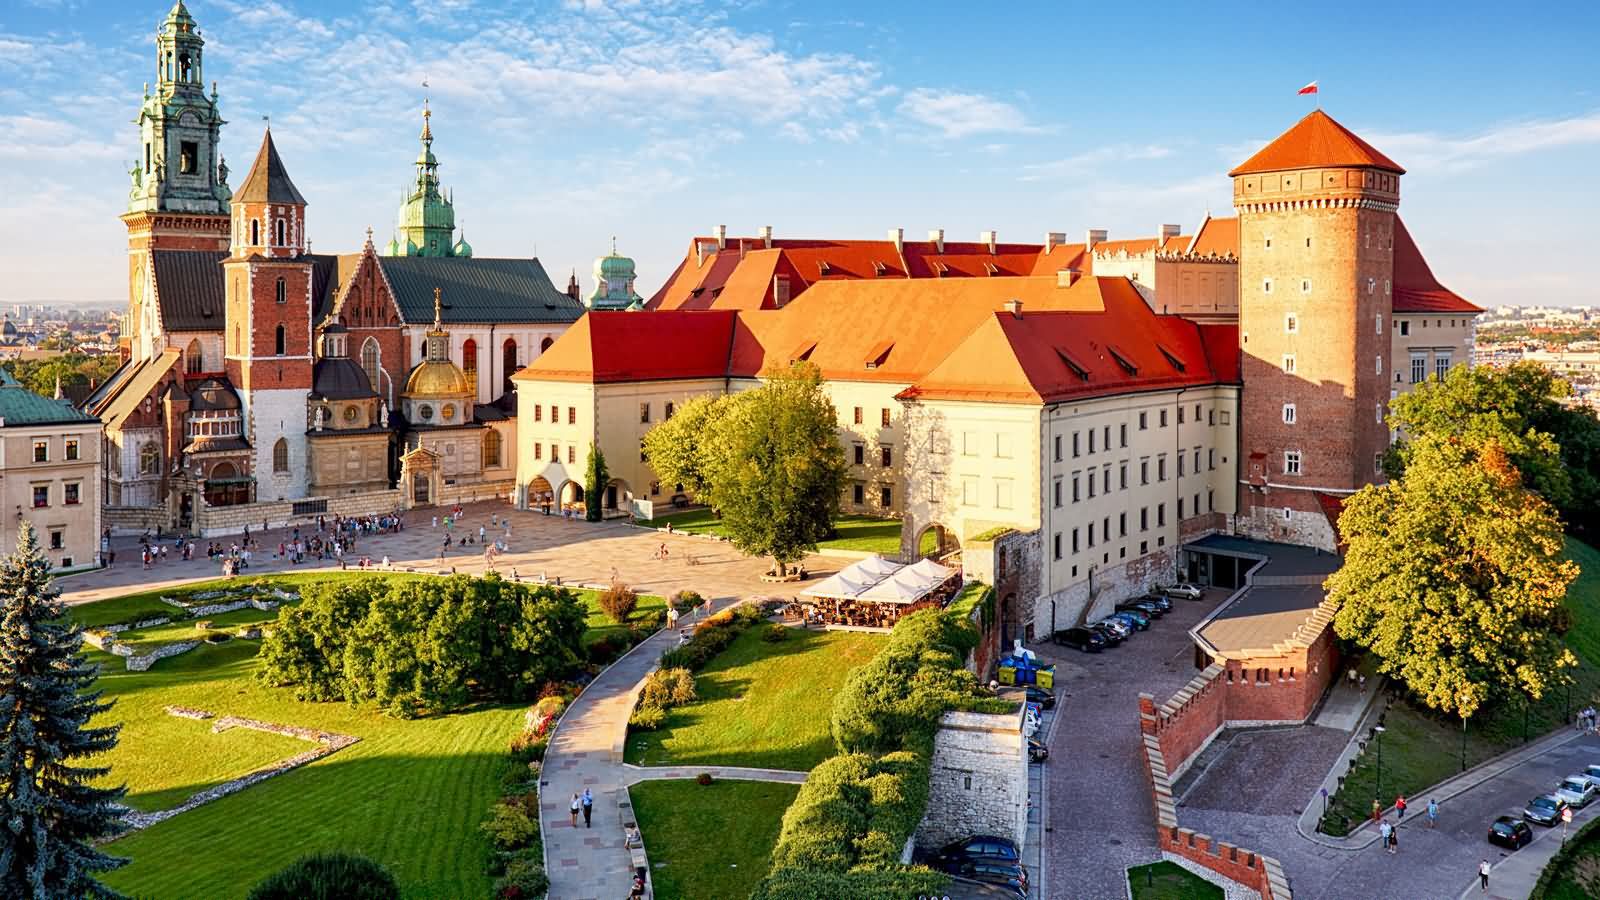 Adorable View Of The Wawel Castle In Krakow